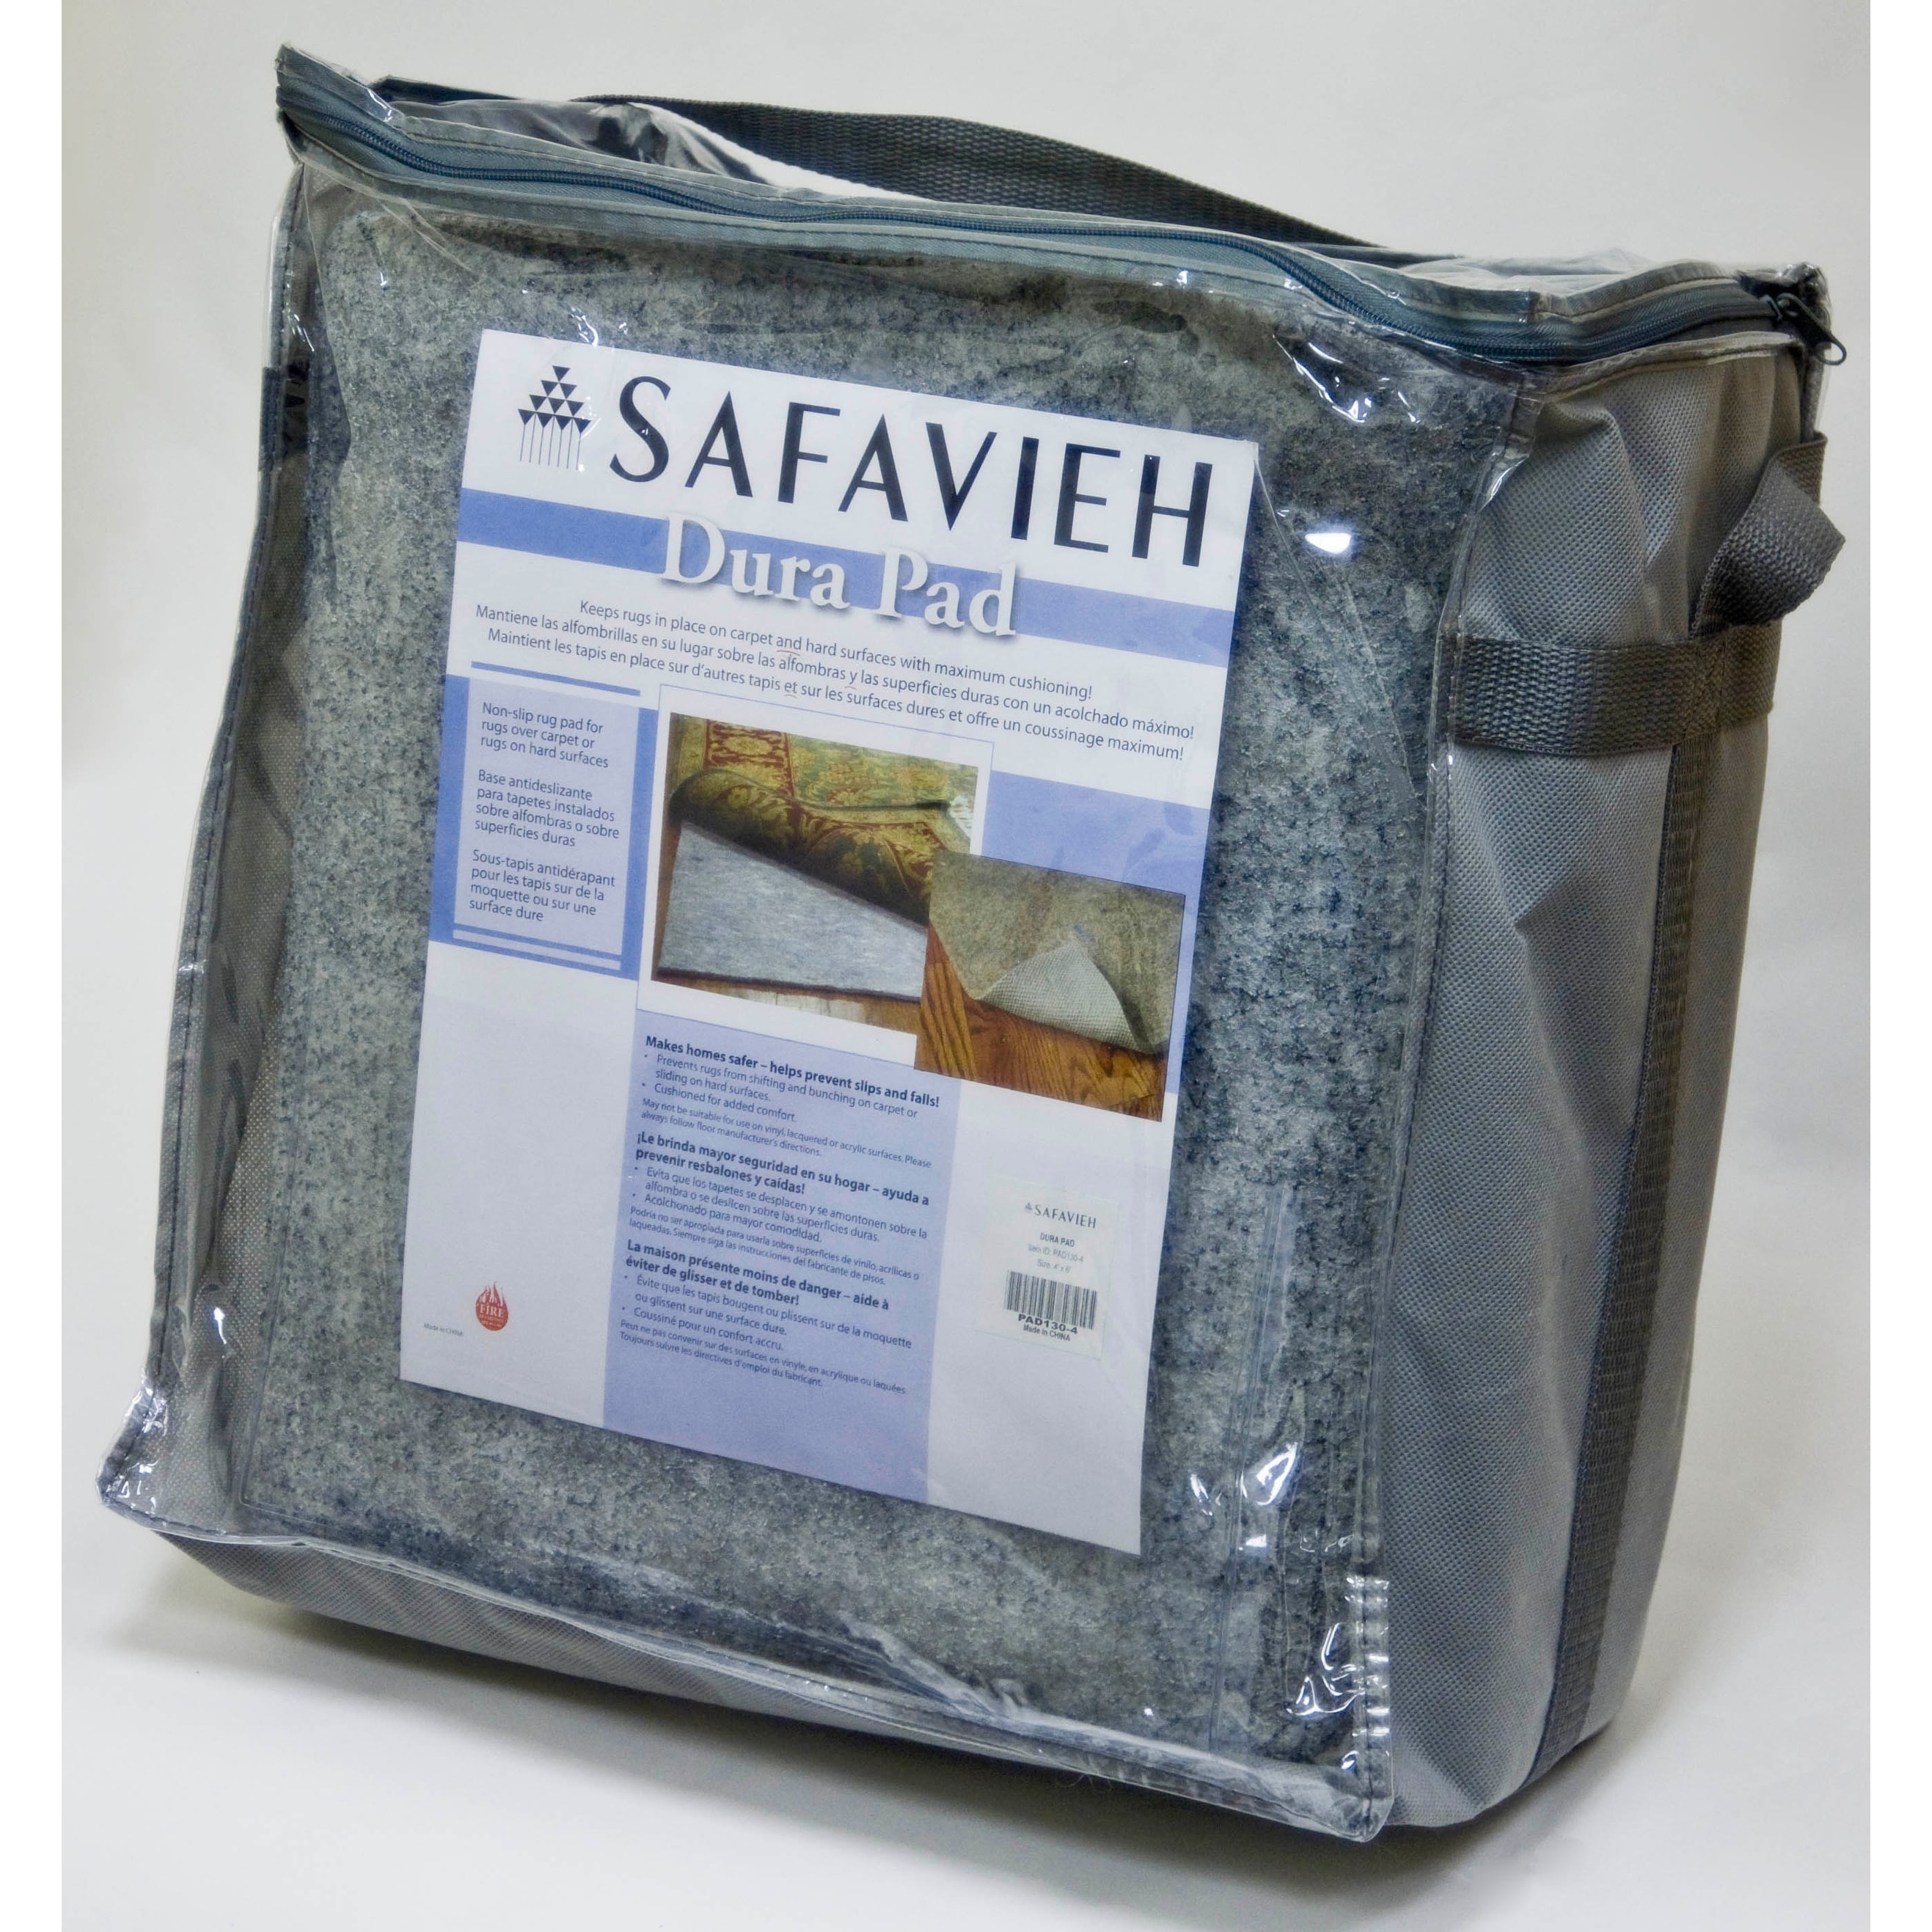 Safavieh Durable Hard Surface and Carpet Non-Slip Rug Pad